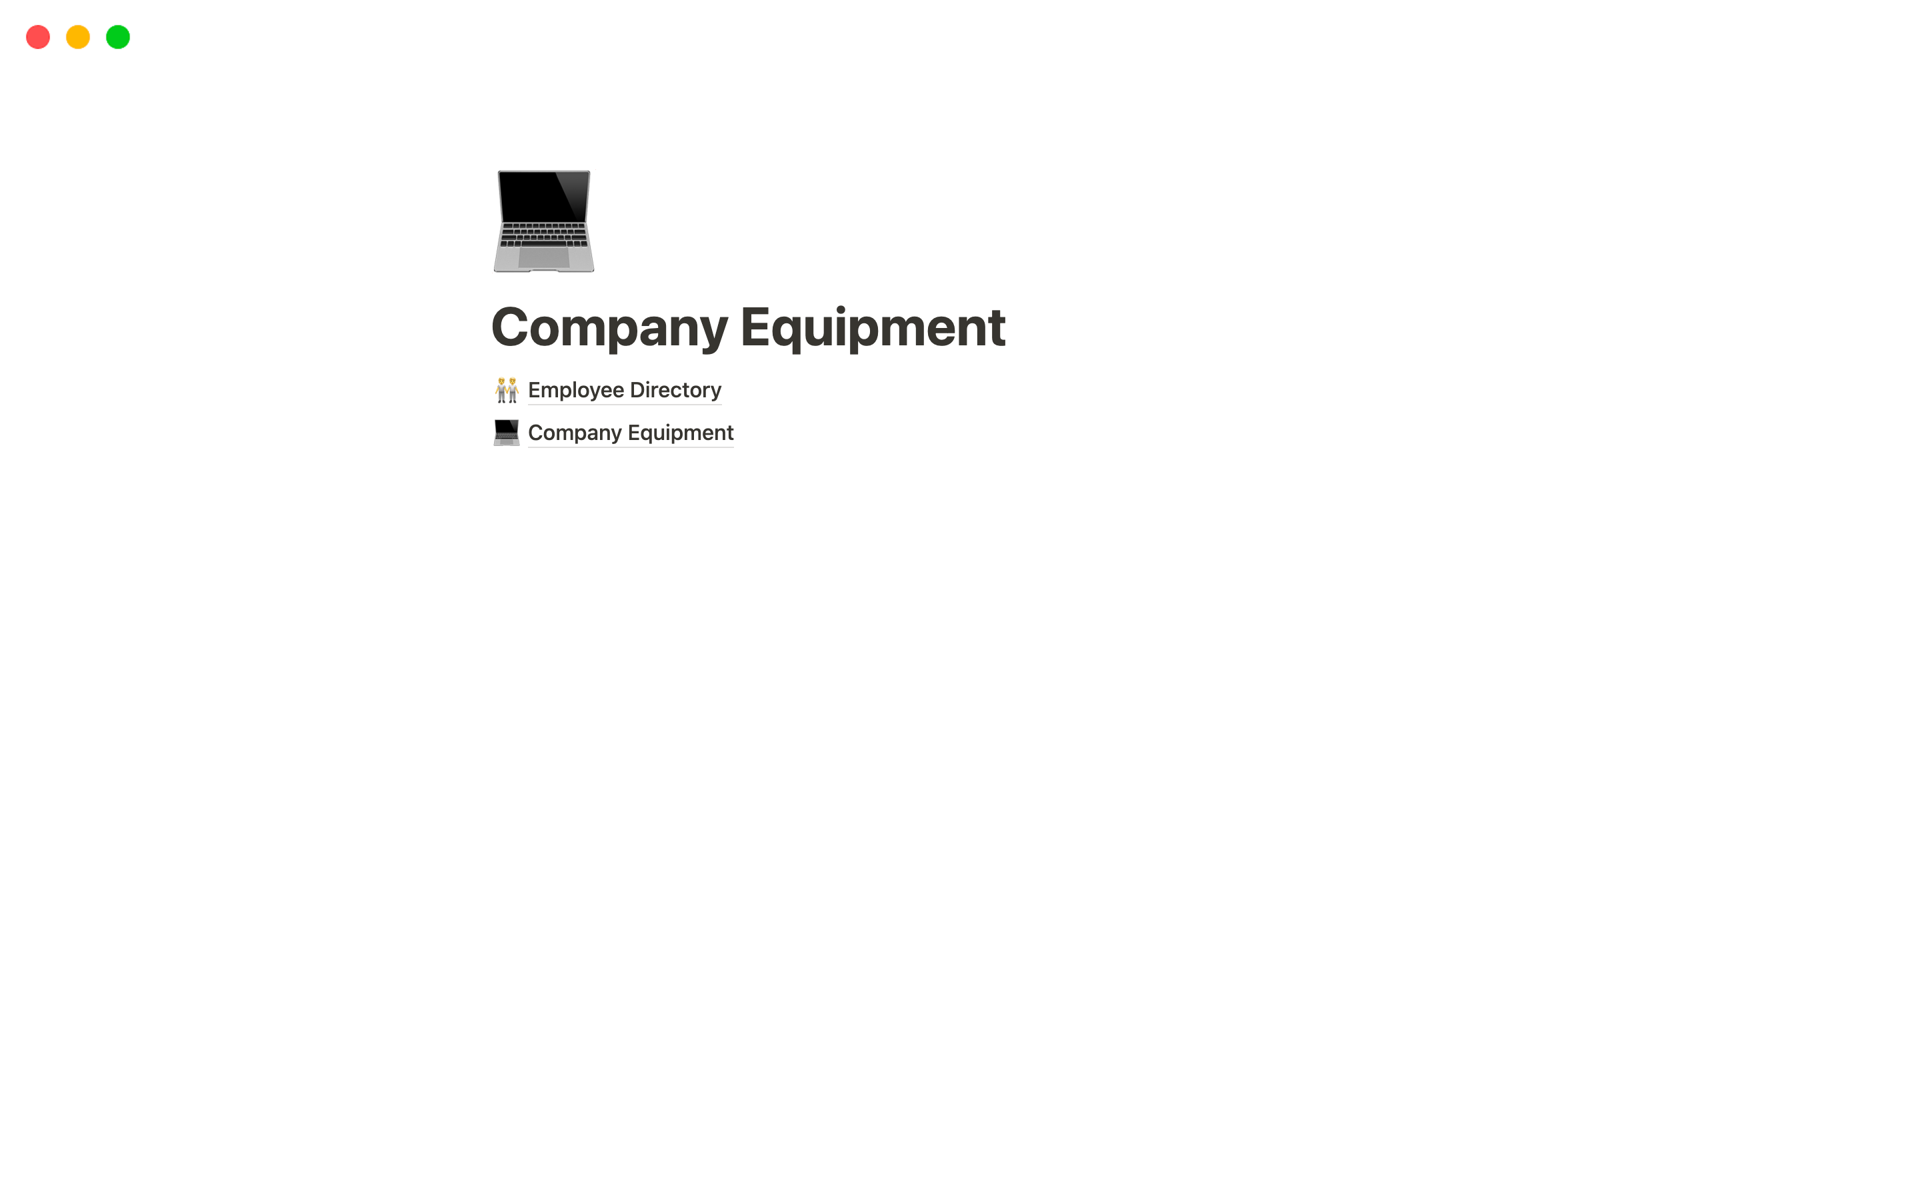 Vista previa de plantilla para Company Equipment Log